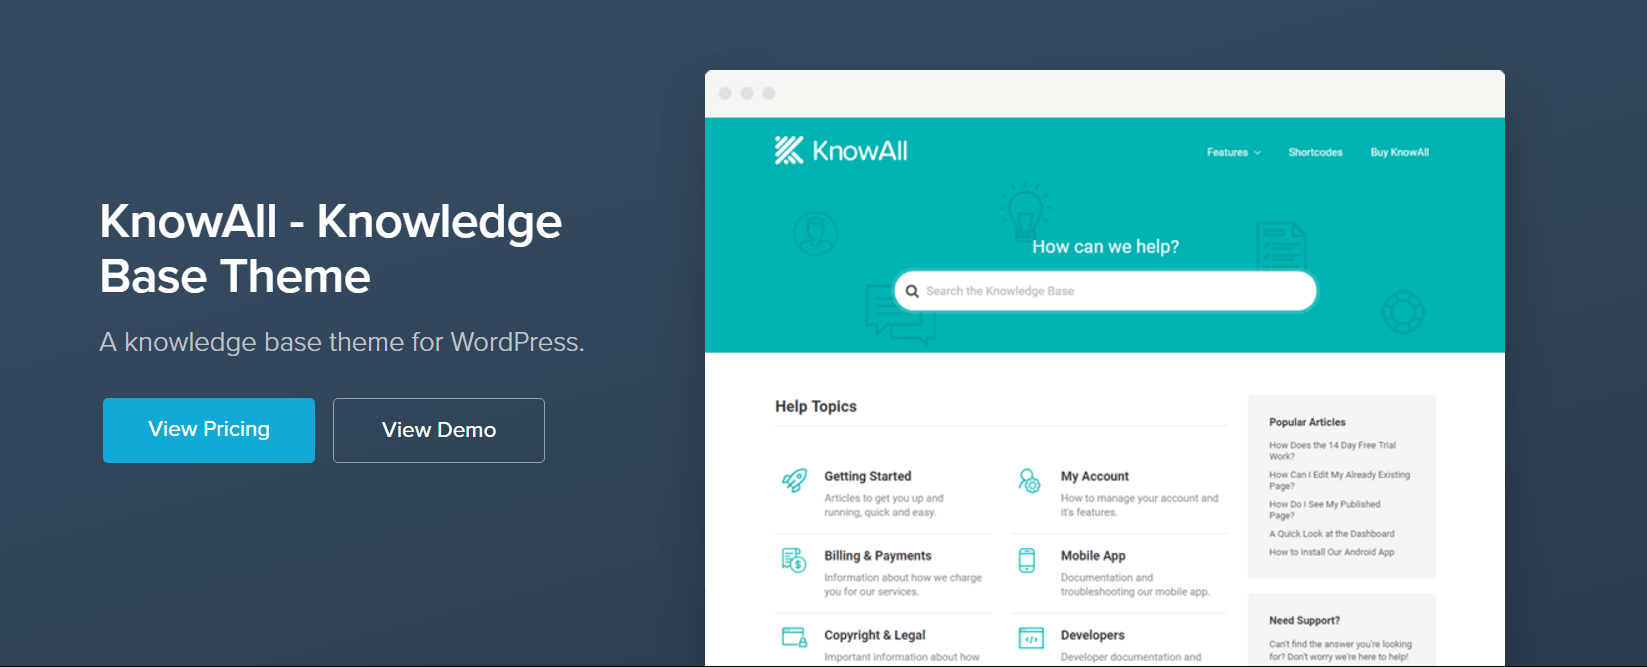 The WordPress KnowAll theme